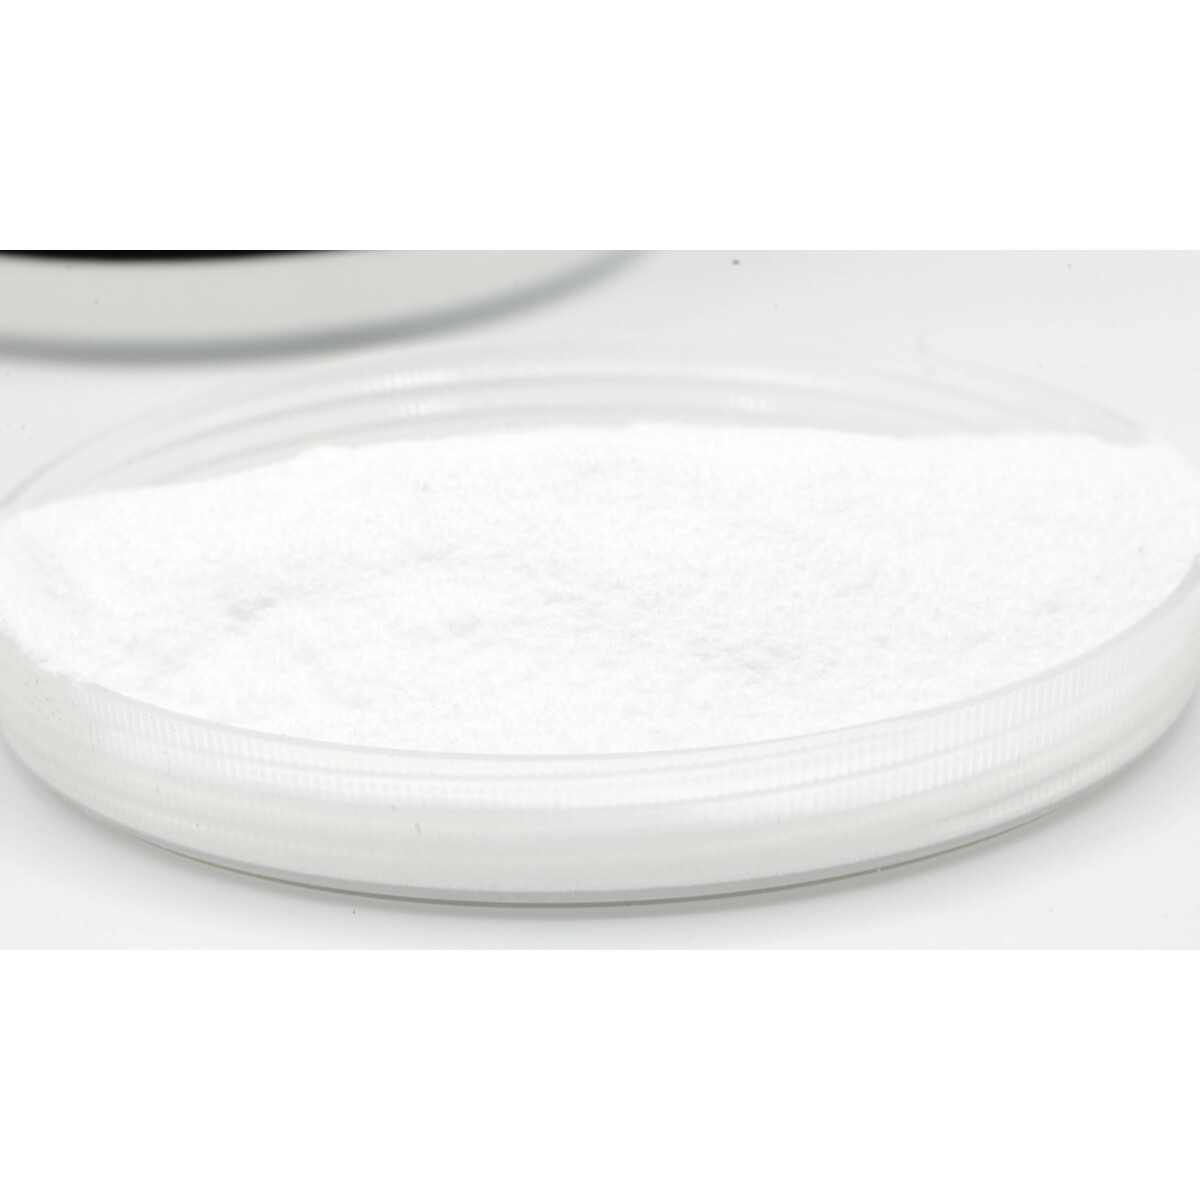 Carpleads Powder Coating - Weiss 1000 g